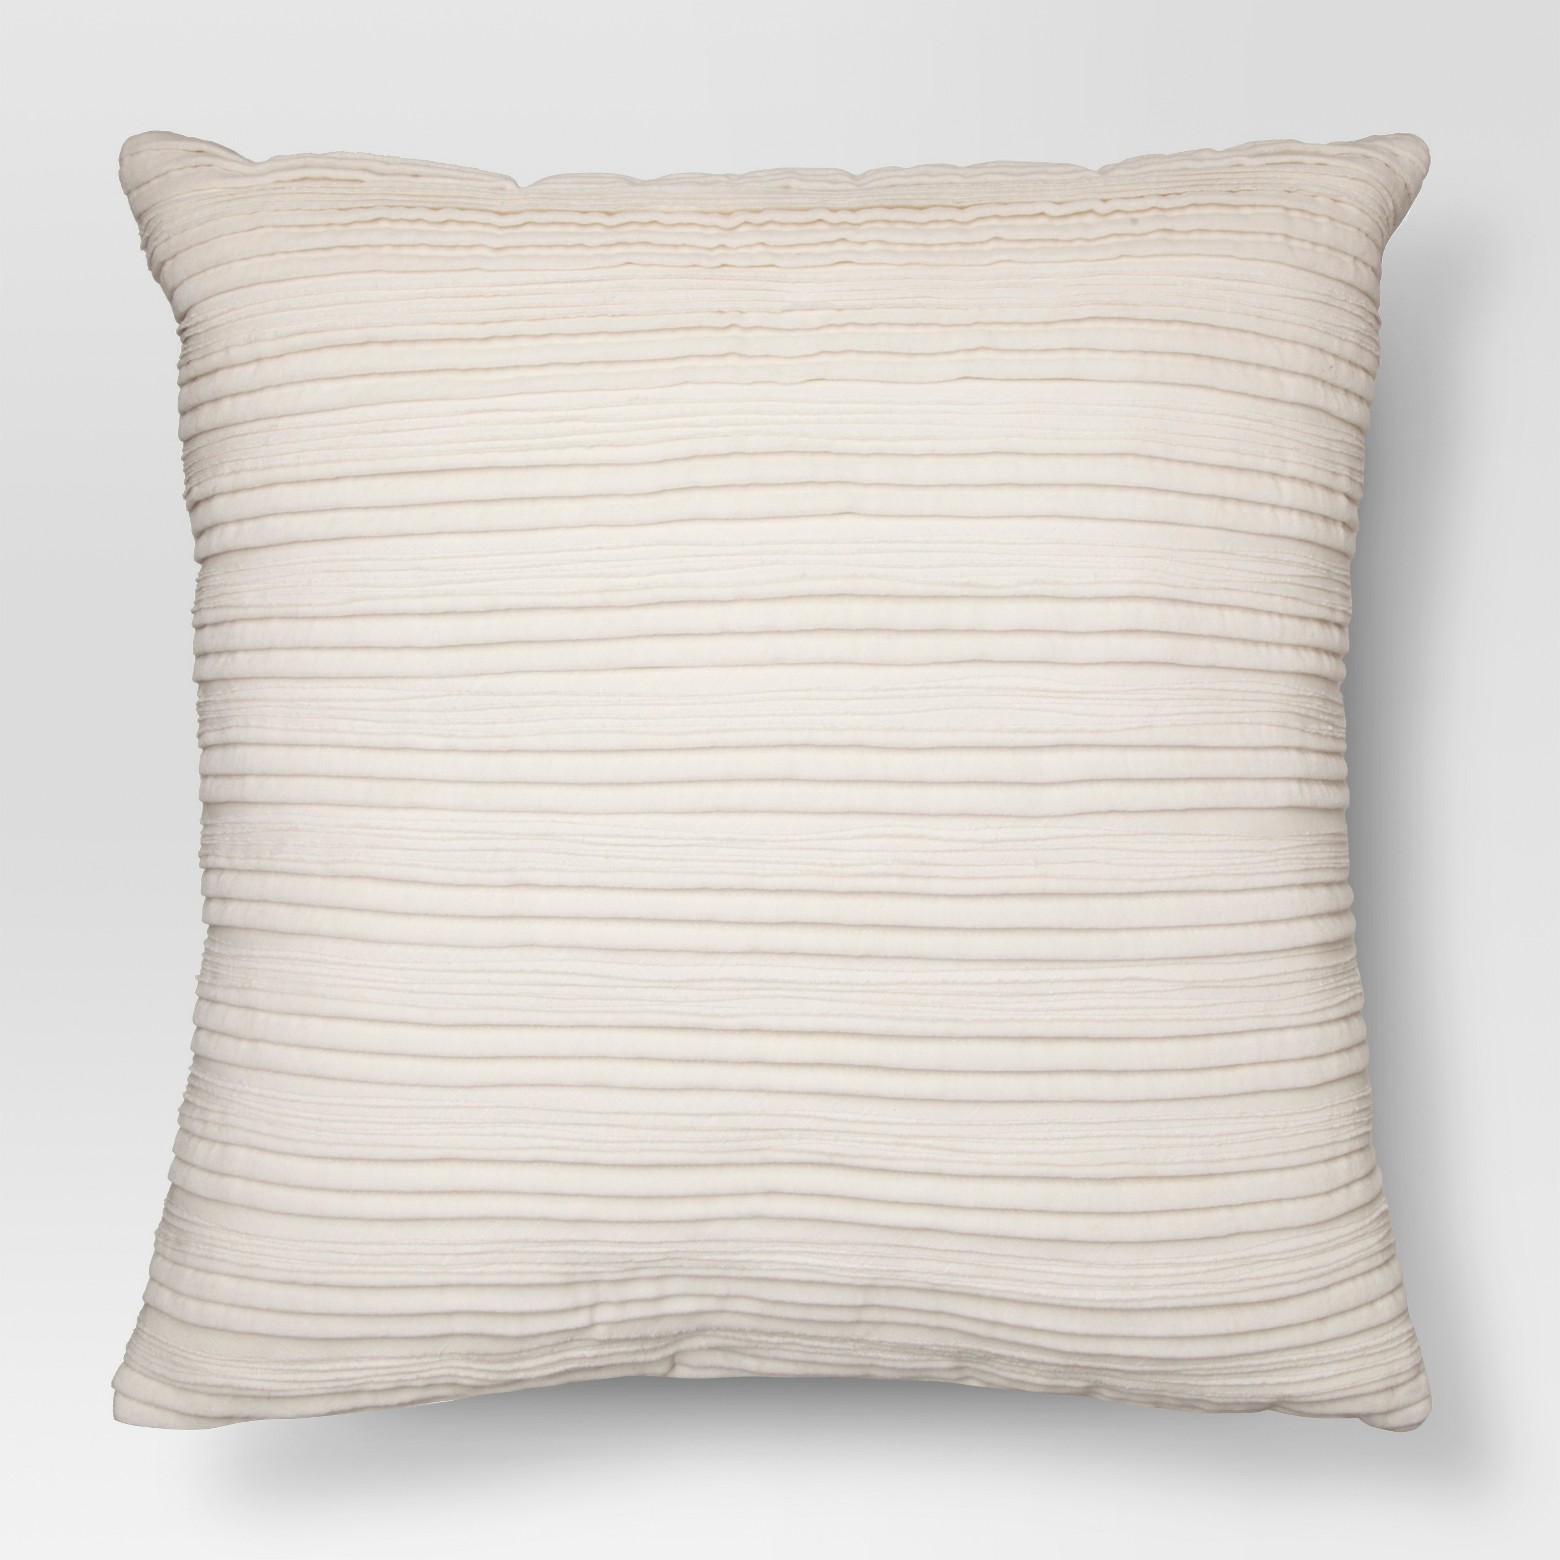 Textured pillow